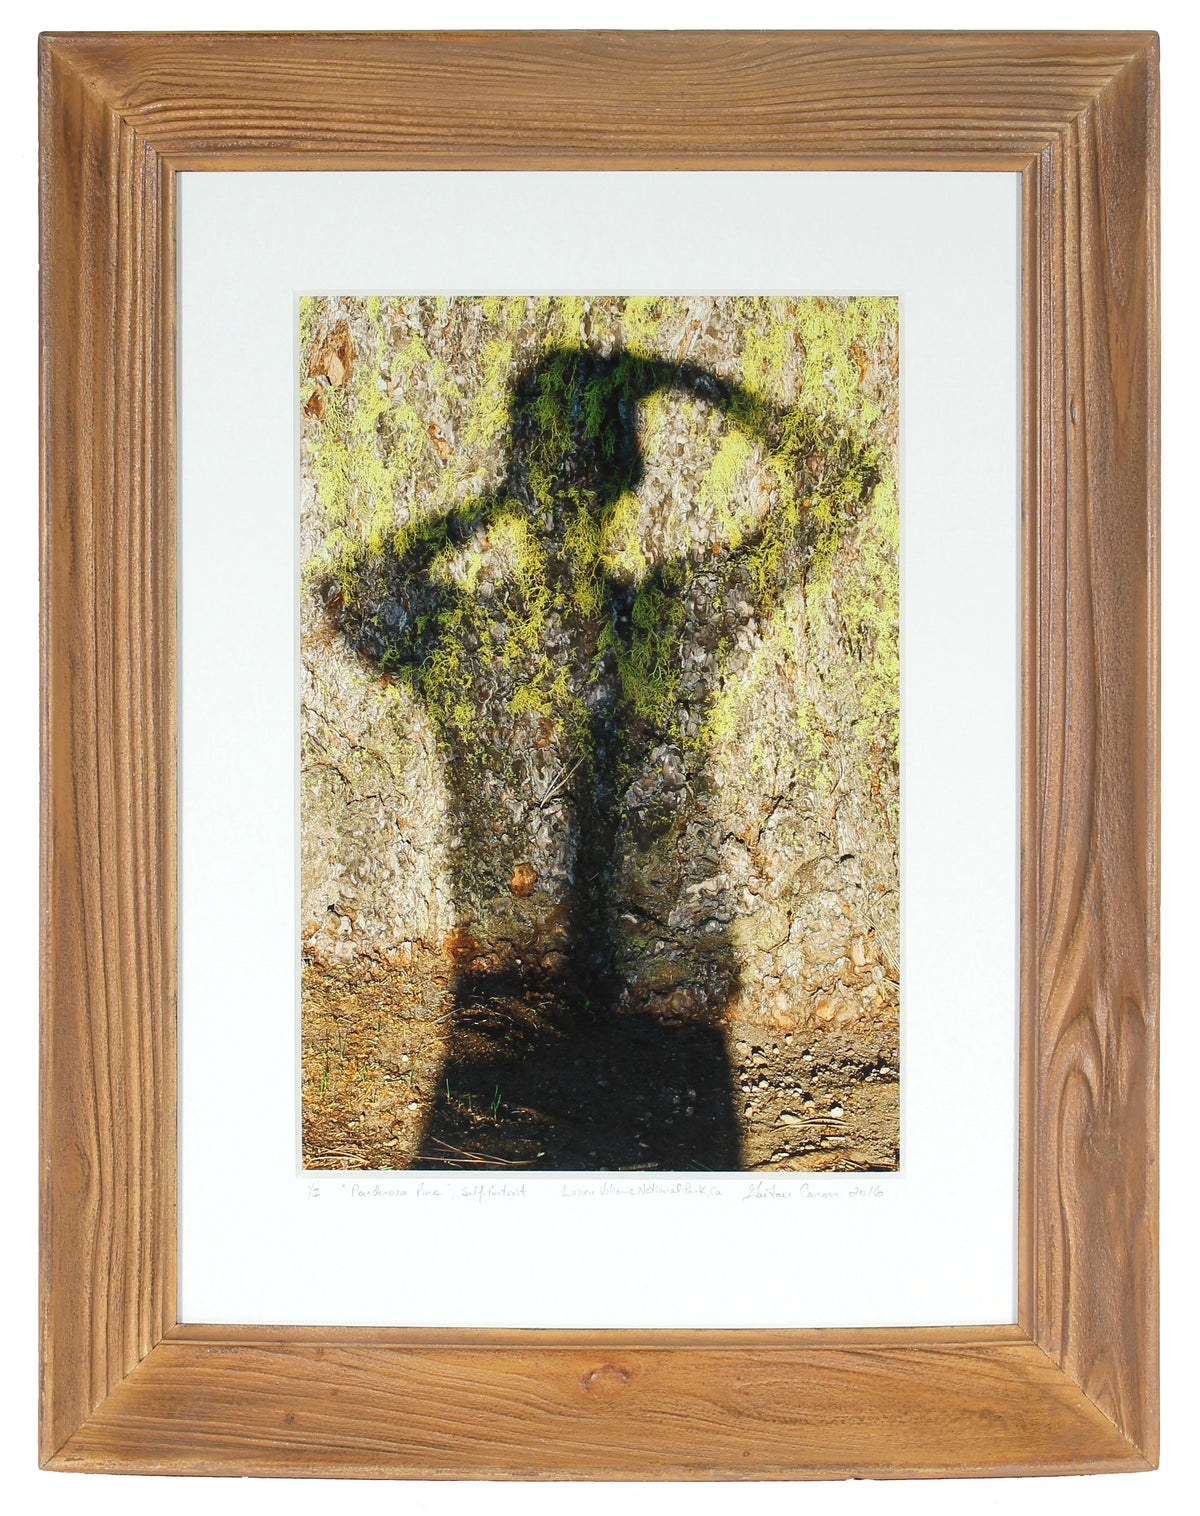 &lt;I&gt;Ponderosa Pine, Self-Portrait&lt;/I&gt;&lt;br&gt;Manzanita Lake, Lassen Volcanic National Park, California, 2016&lt;br&gt;&lt;br&gt;#GC0420_A